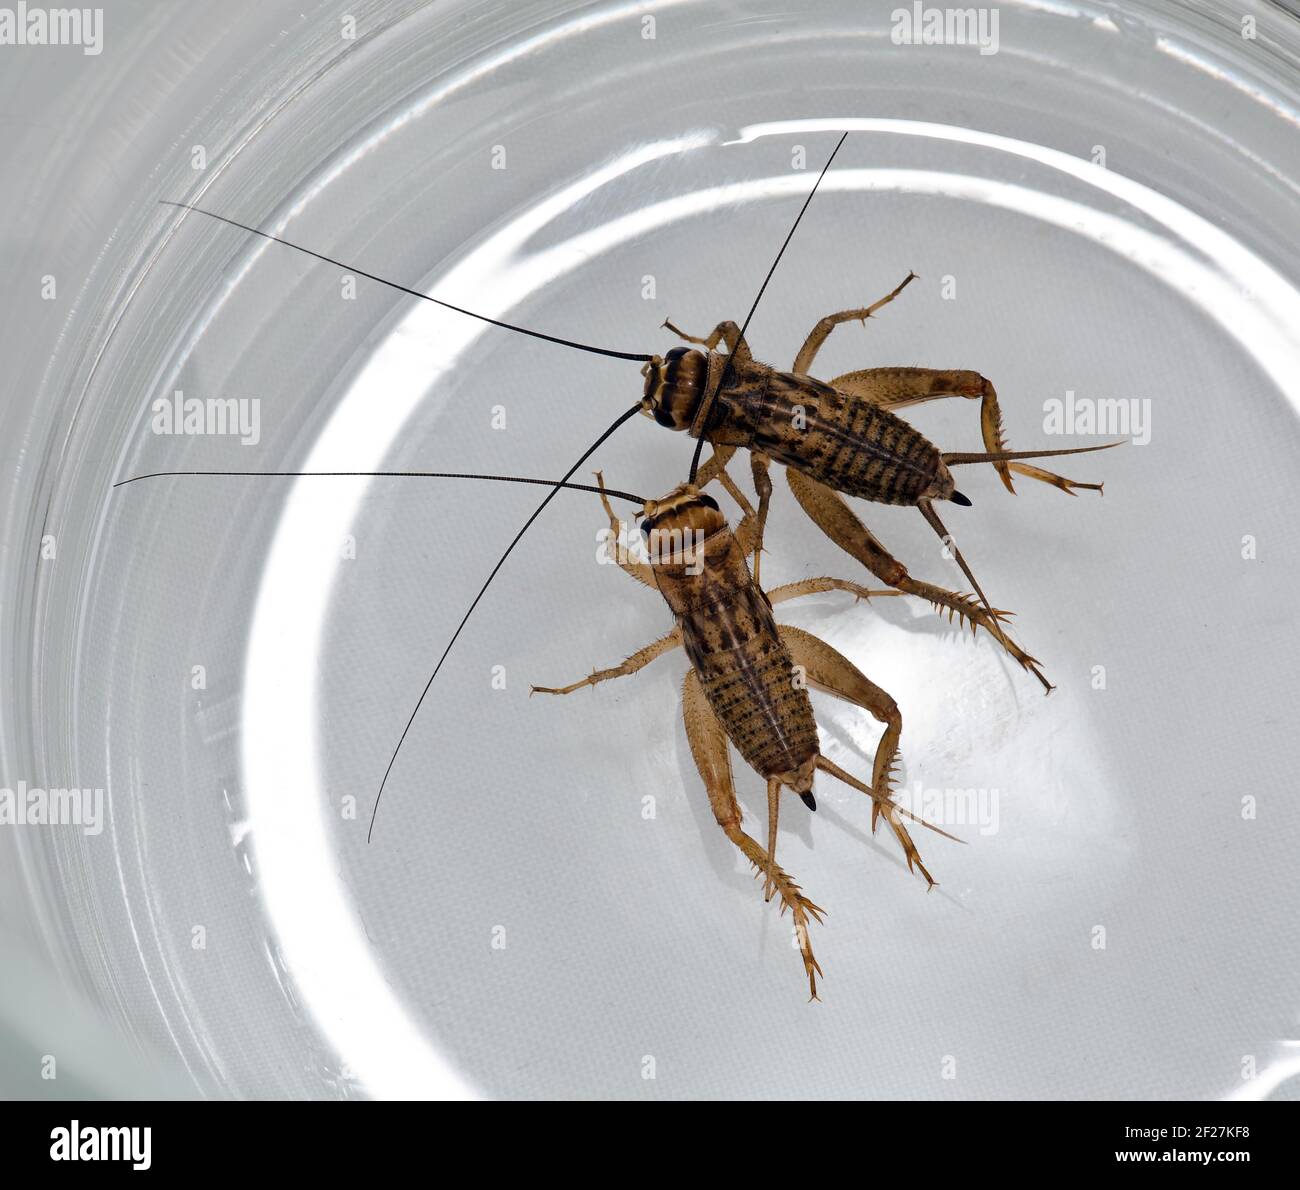 Two crickets creep in a glass mug Stock Photo